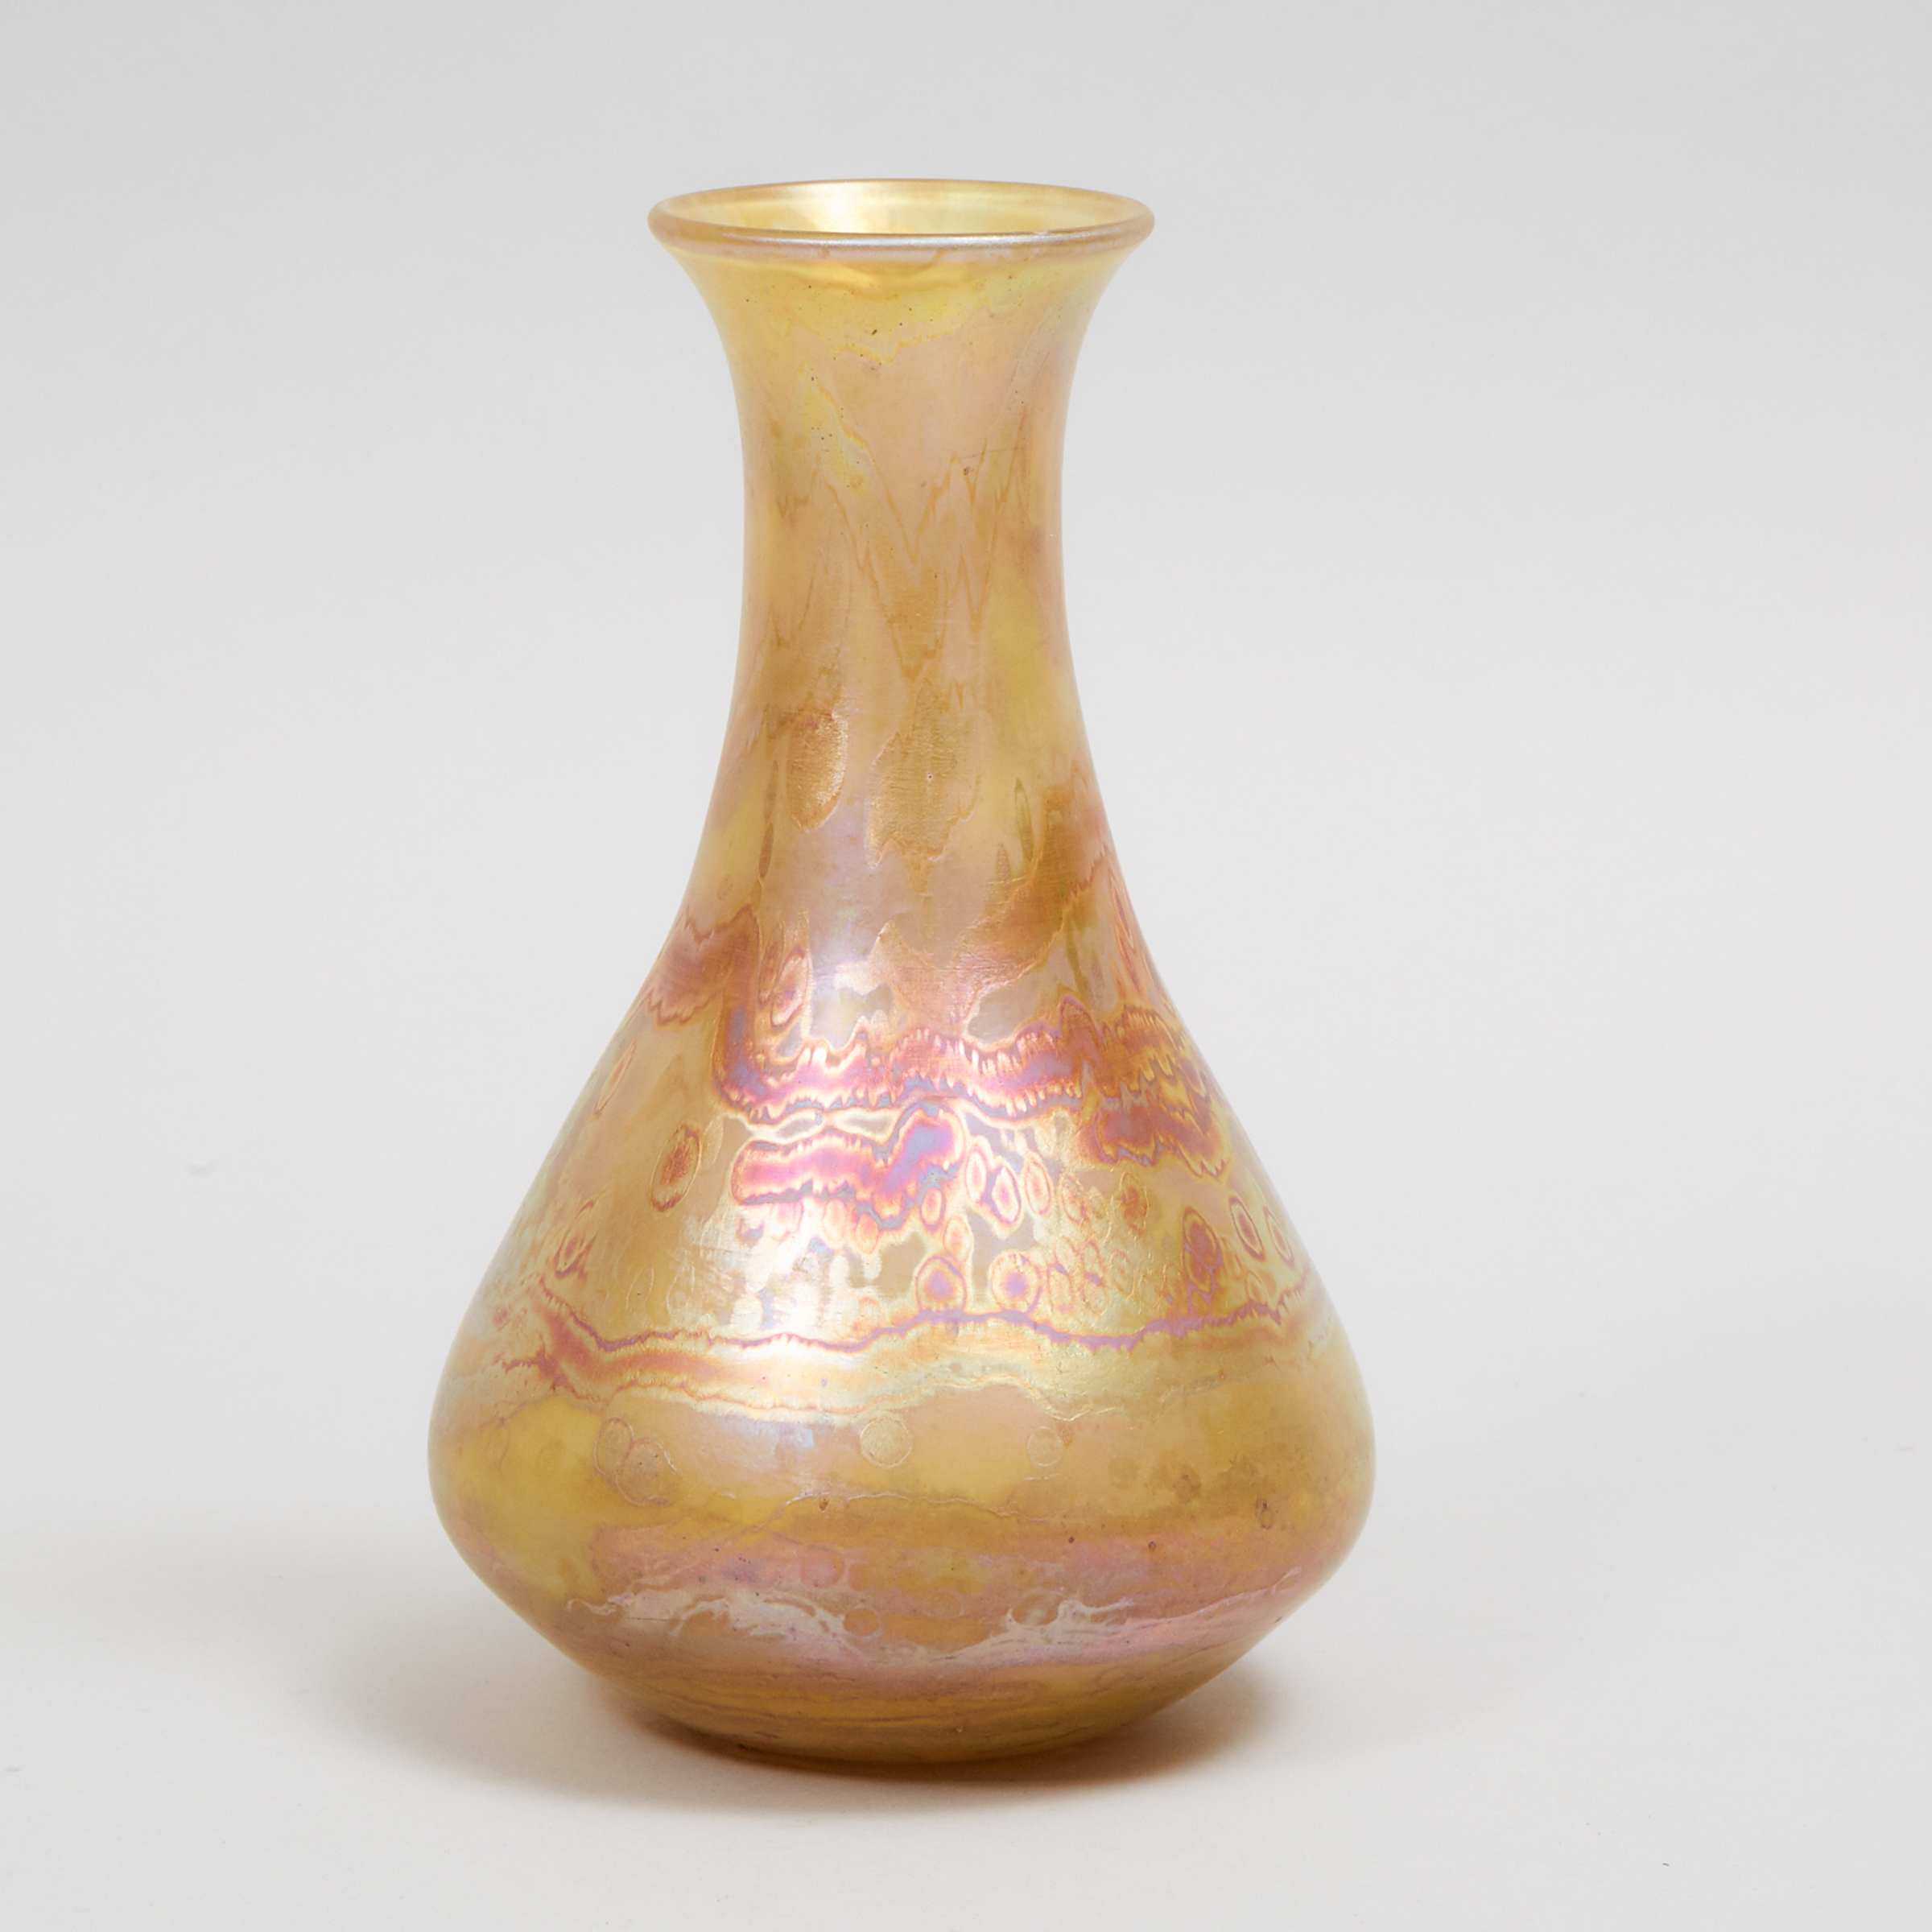 Daniel Crichton (Canadian, 1950-2002), Iridescent Glass Vase, 1979